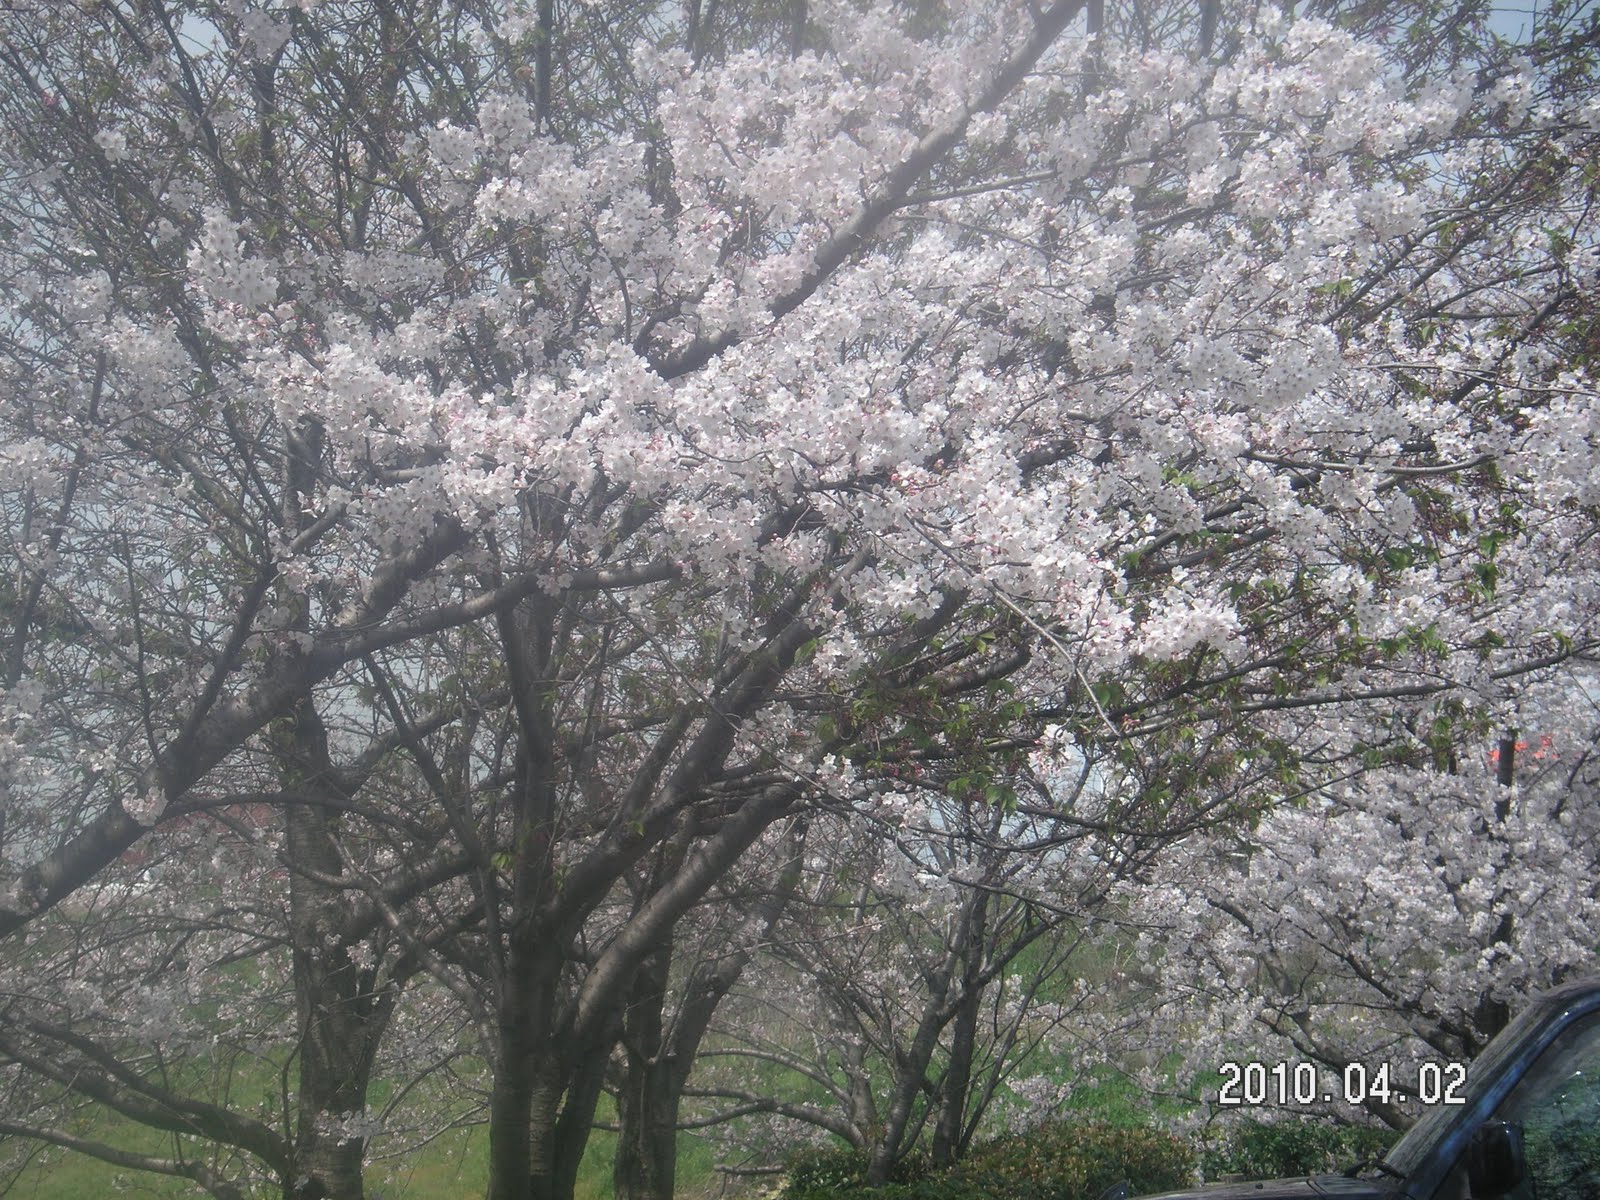 http://3.bp.blogspot.com/-p4gZgJGSQ9E/TyclgwElYtI/AAAAAAAAA7Q/KsQGADSmSs8/s1600/spring+trees.JPG